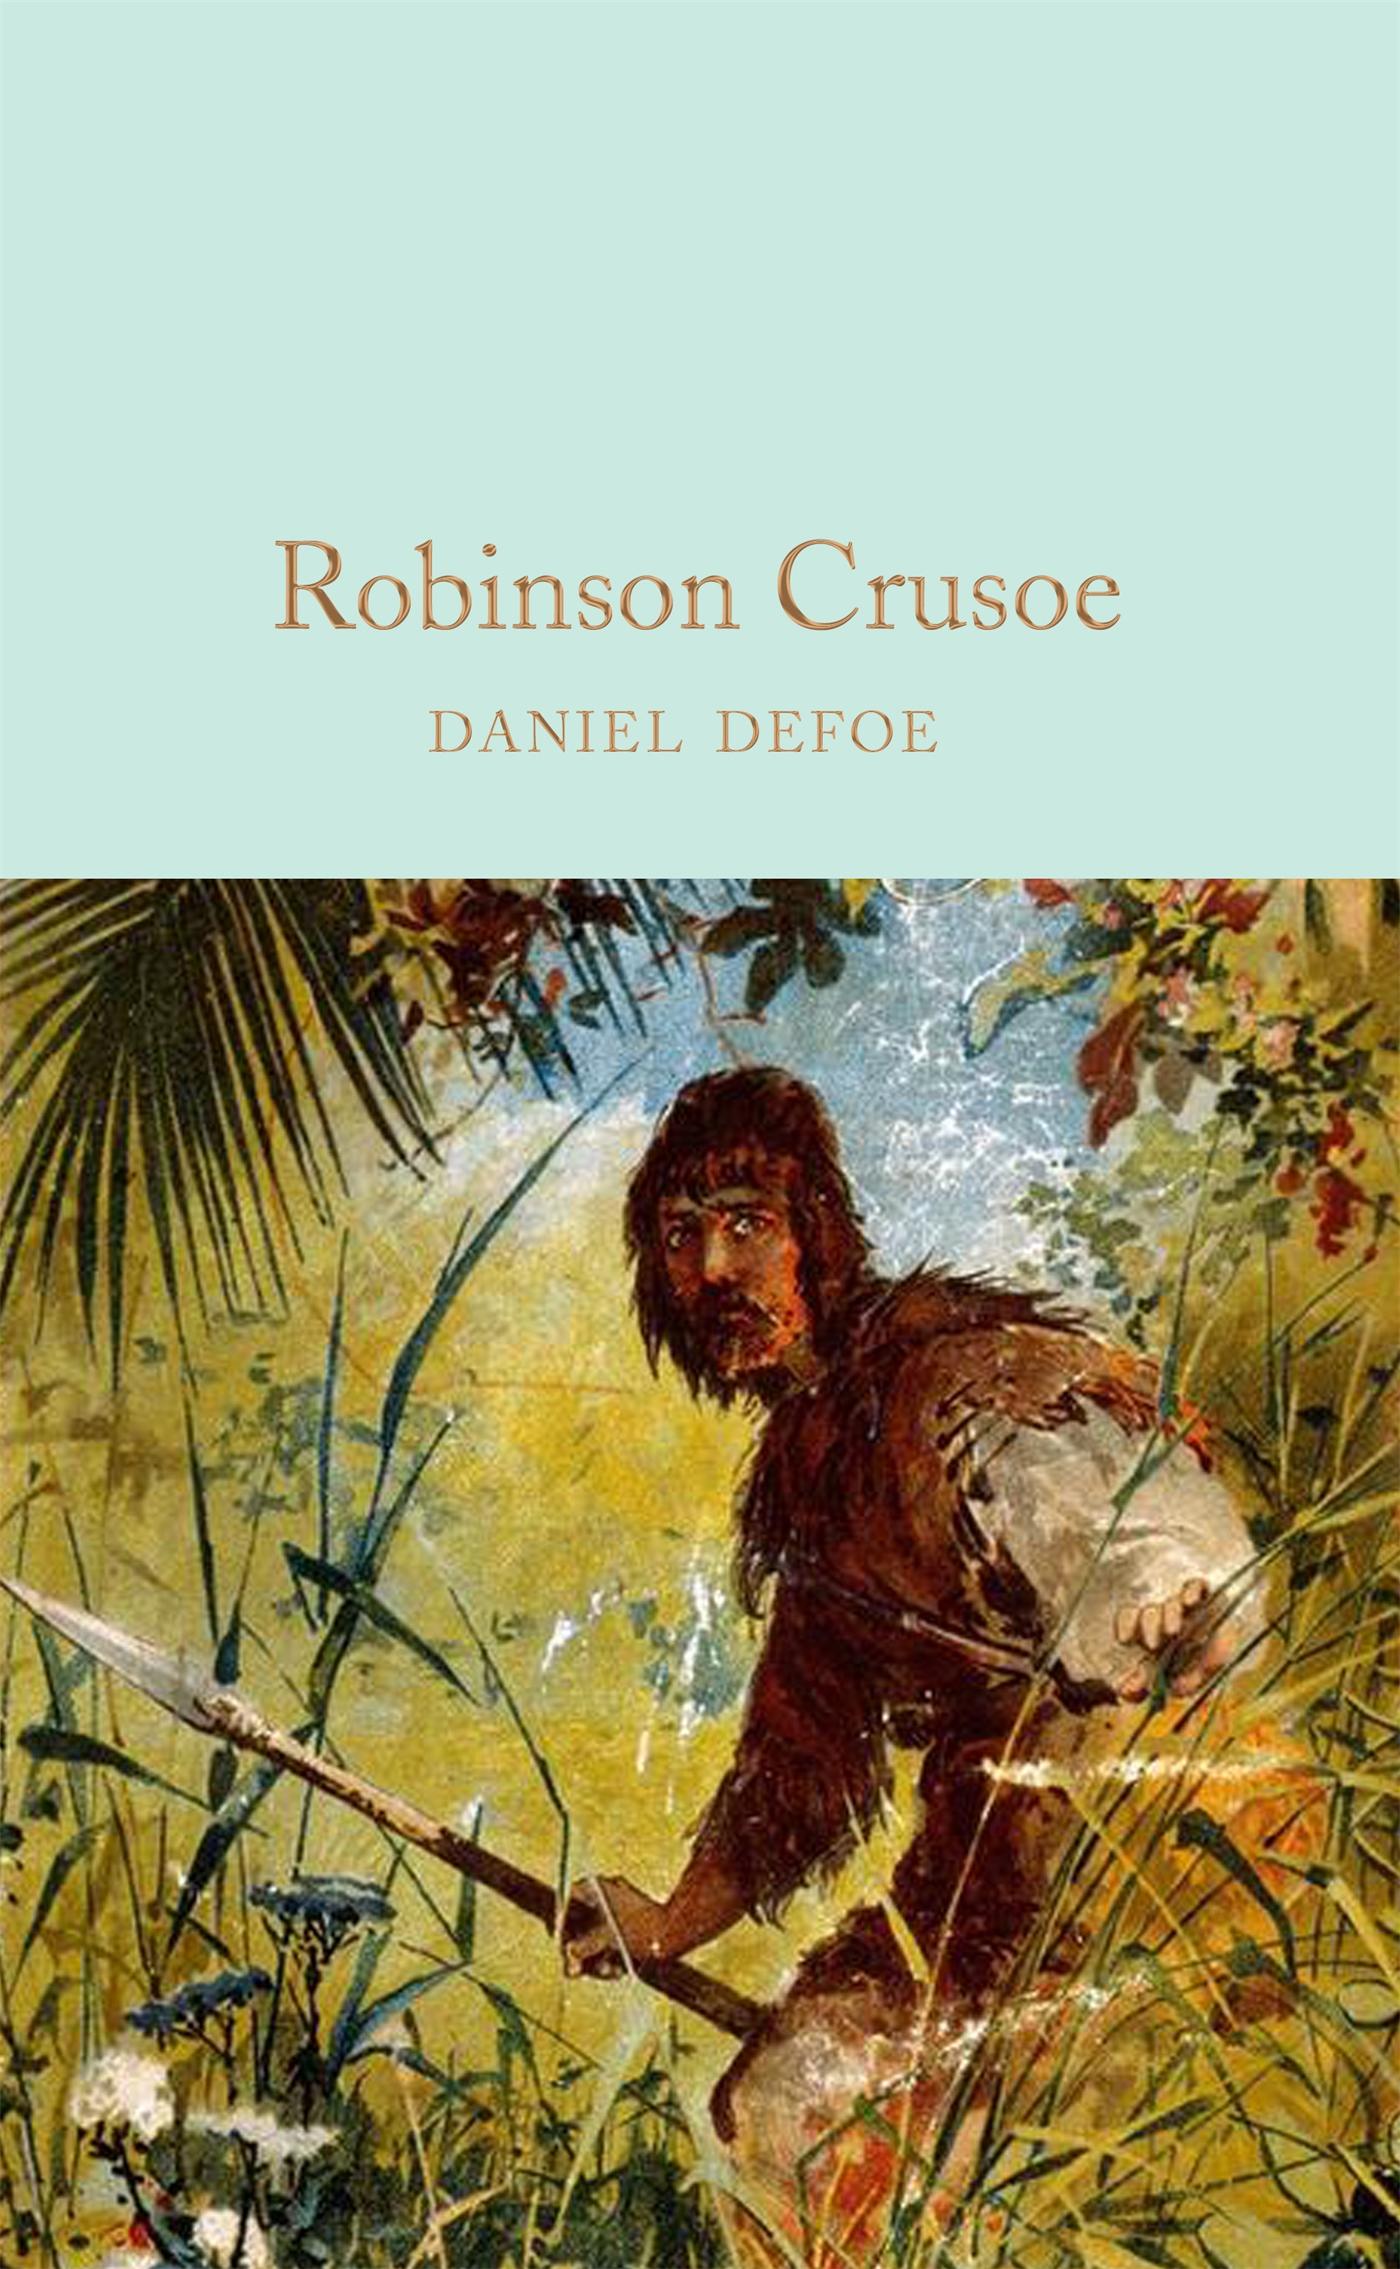 Robinson Crusoe / Daniel Defoe / Buch / Macmillan Collector's Library / 389 S. / Englisch / 2017 / Pan Macmillan / EAN 9781509842896 - Defoe, Daniel